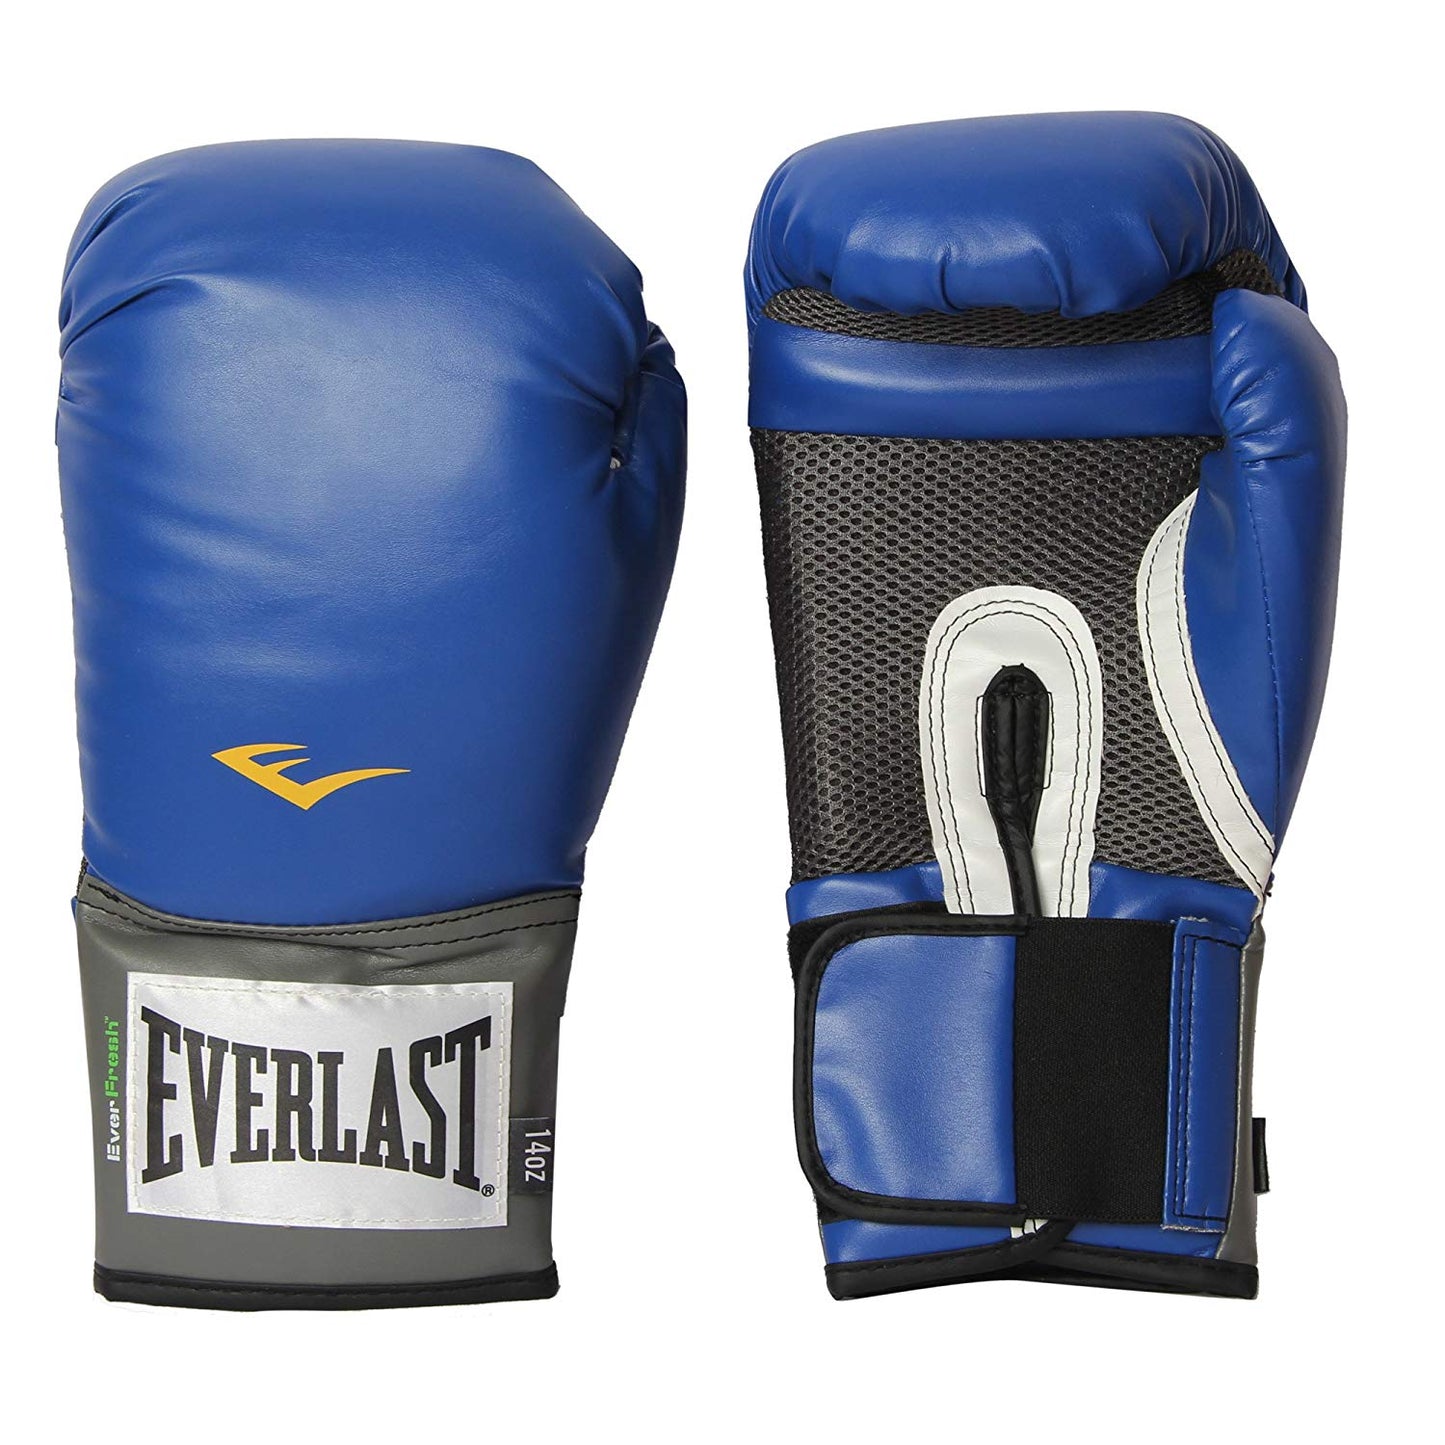 Everlast 1200025 Pro Style Training Boxing Gloves (Blue) - Best Price online Prokicksports.com